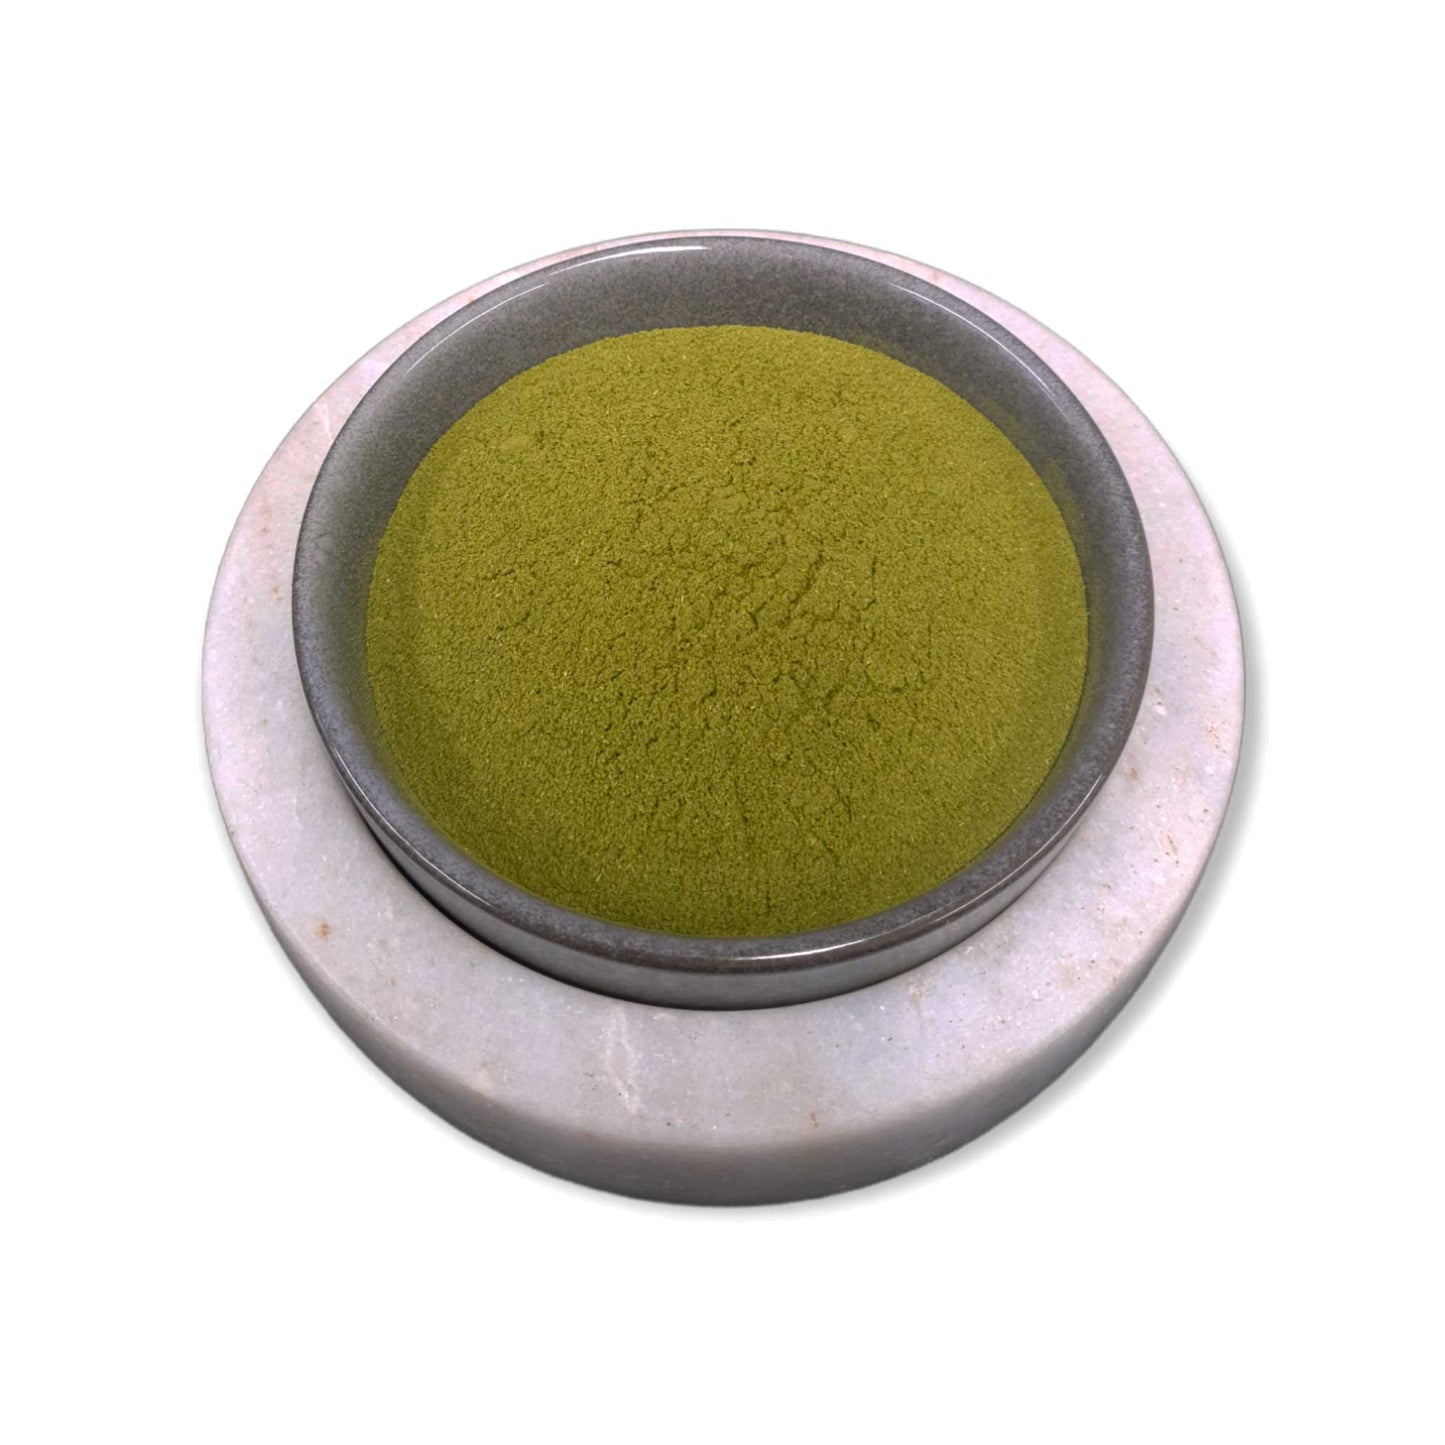 400g Organic Moringa Leaf Powder - Supplement Moringa Oleifera Drumstick Leaf